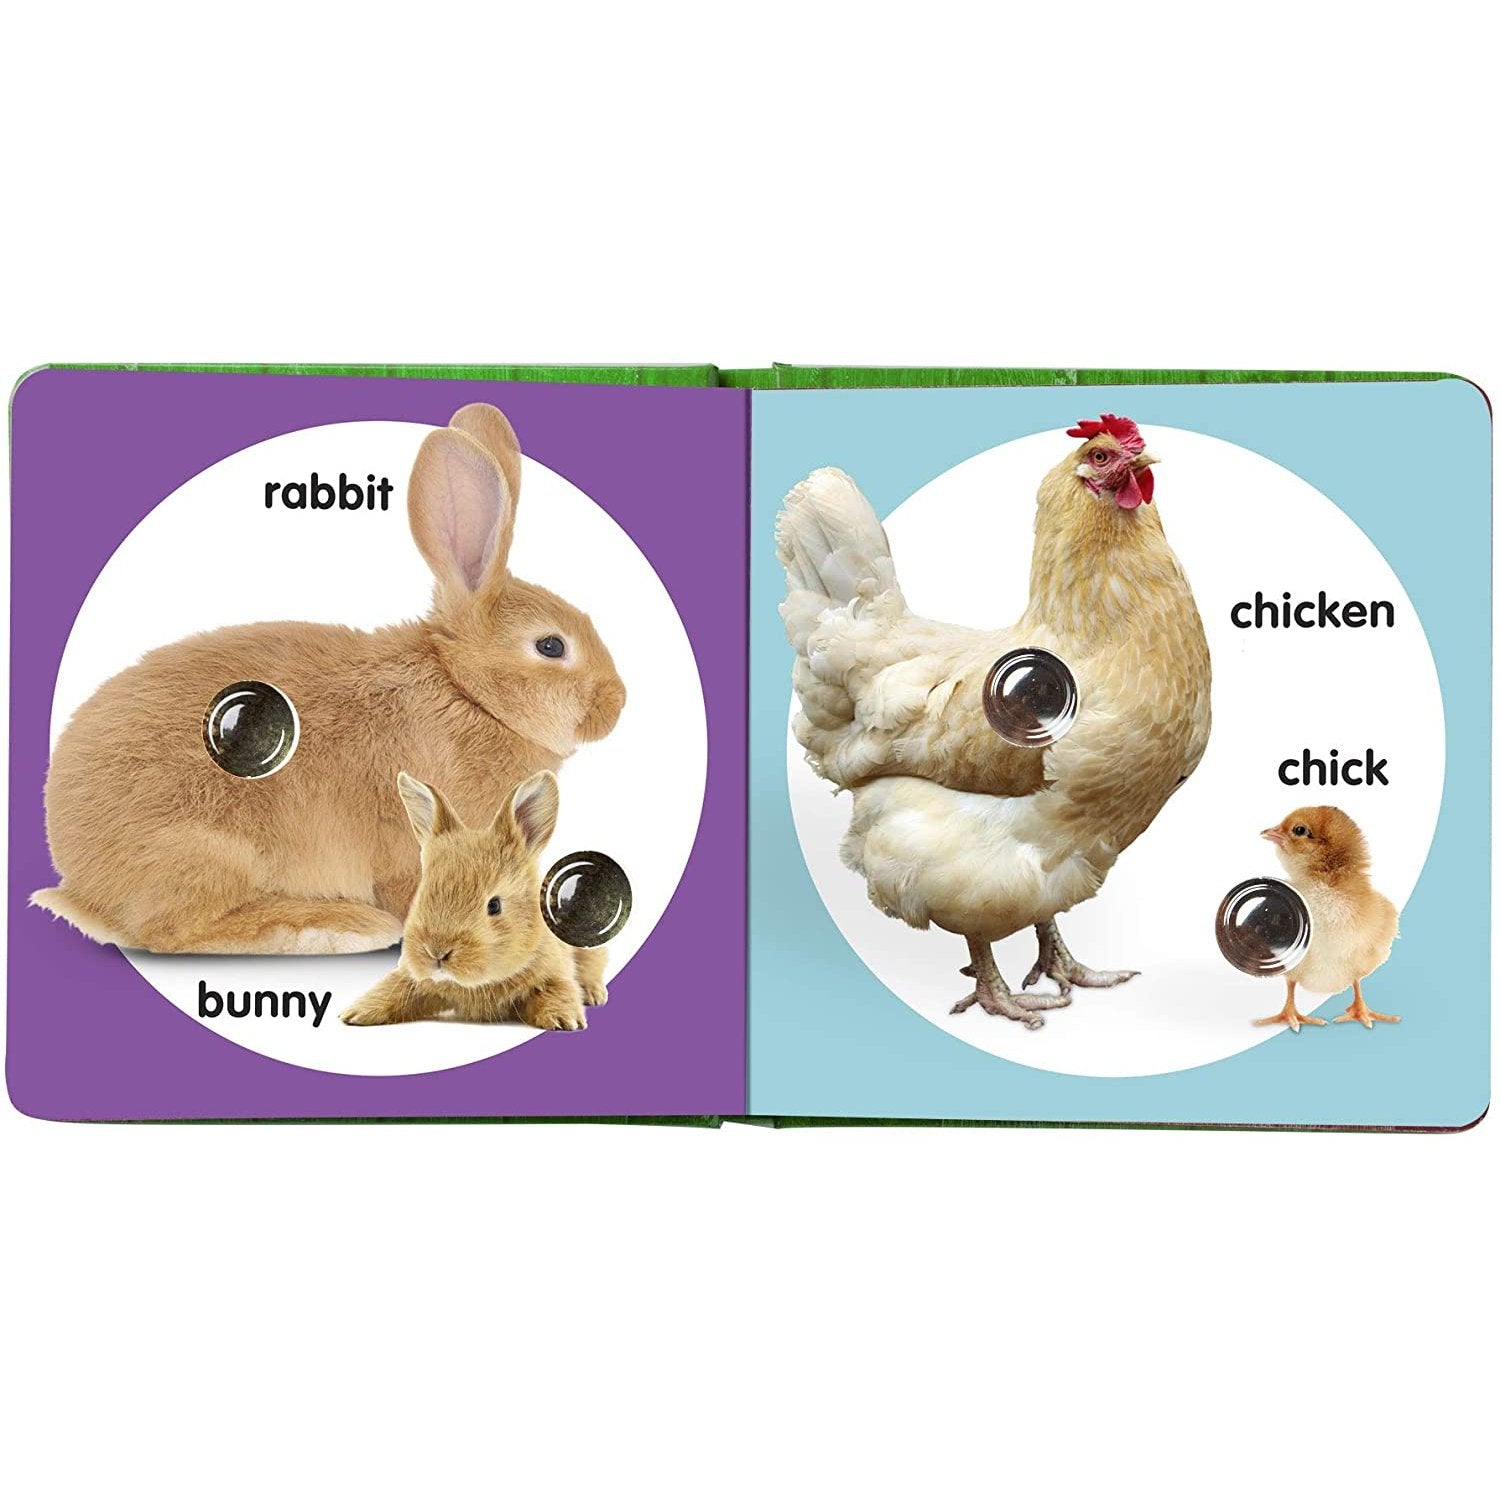 Poke-A-Dot Animal Families - Set of 3 Books by Melissa & Doug